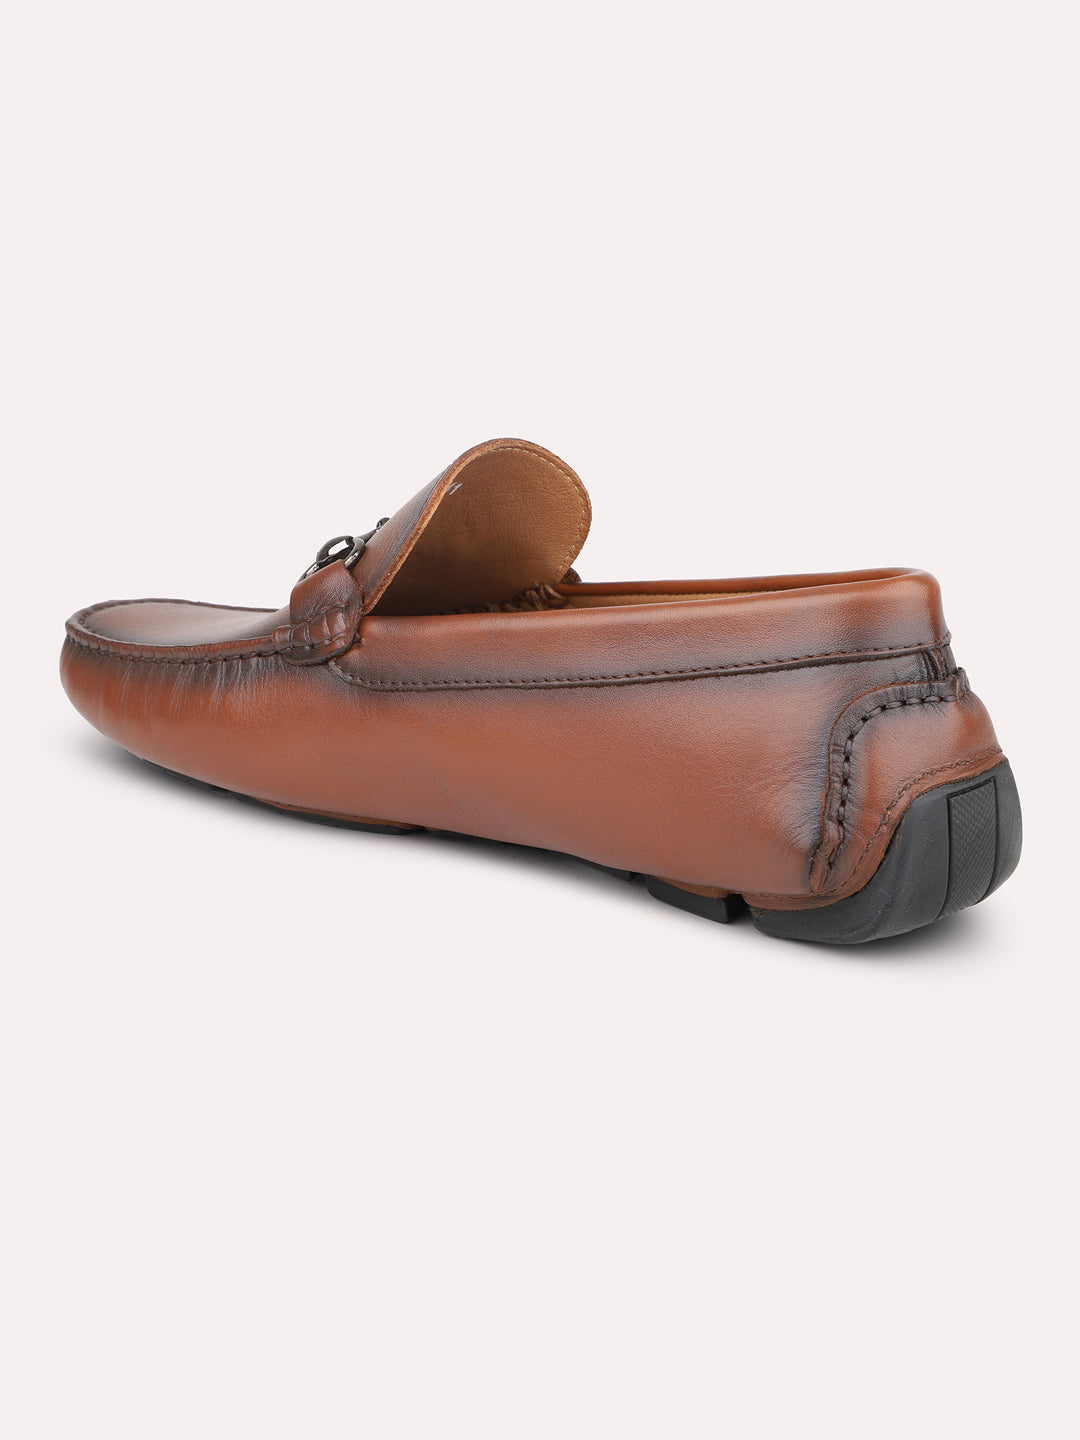 Atesber Brown Loafer Driving Shoes For Men